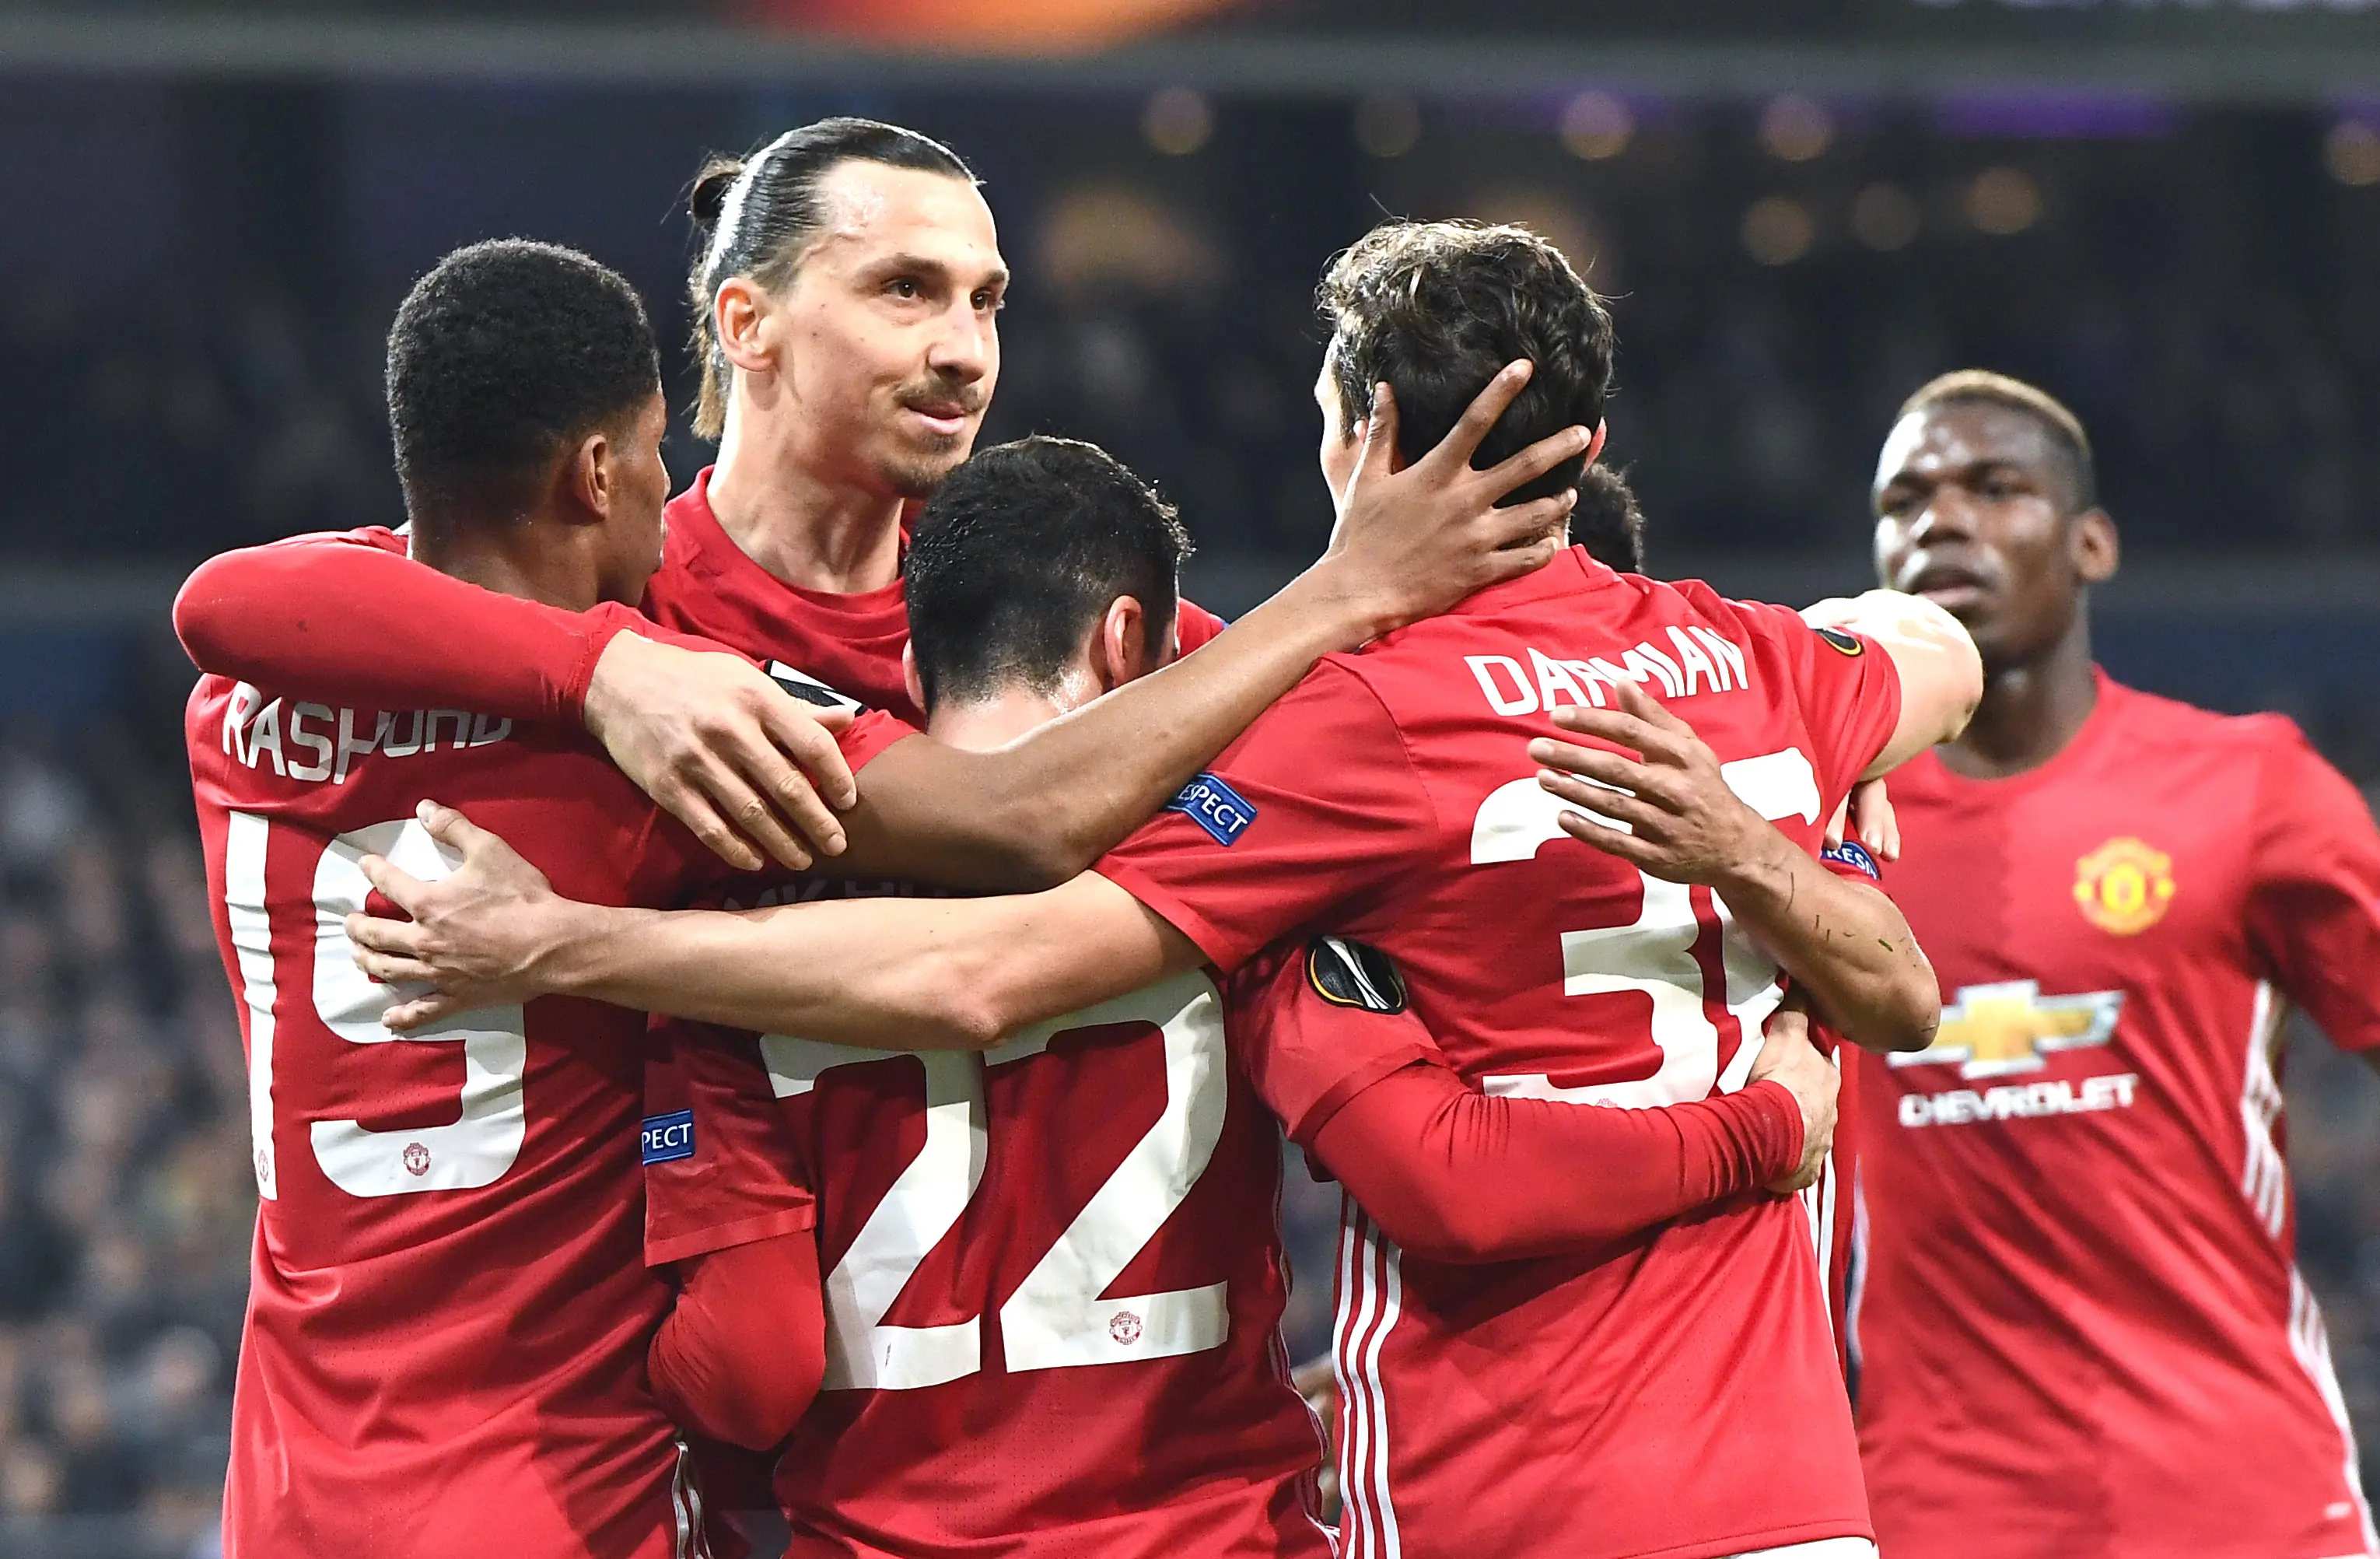 Penyerang Manchester United (MU), Zlatan Ibrahimovic bersama beberapa rekan setimnya. (EMMANUEL DUNAND / AFP)